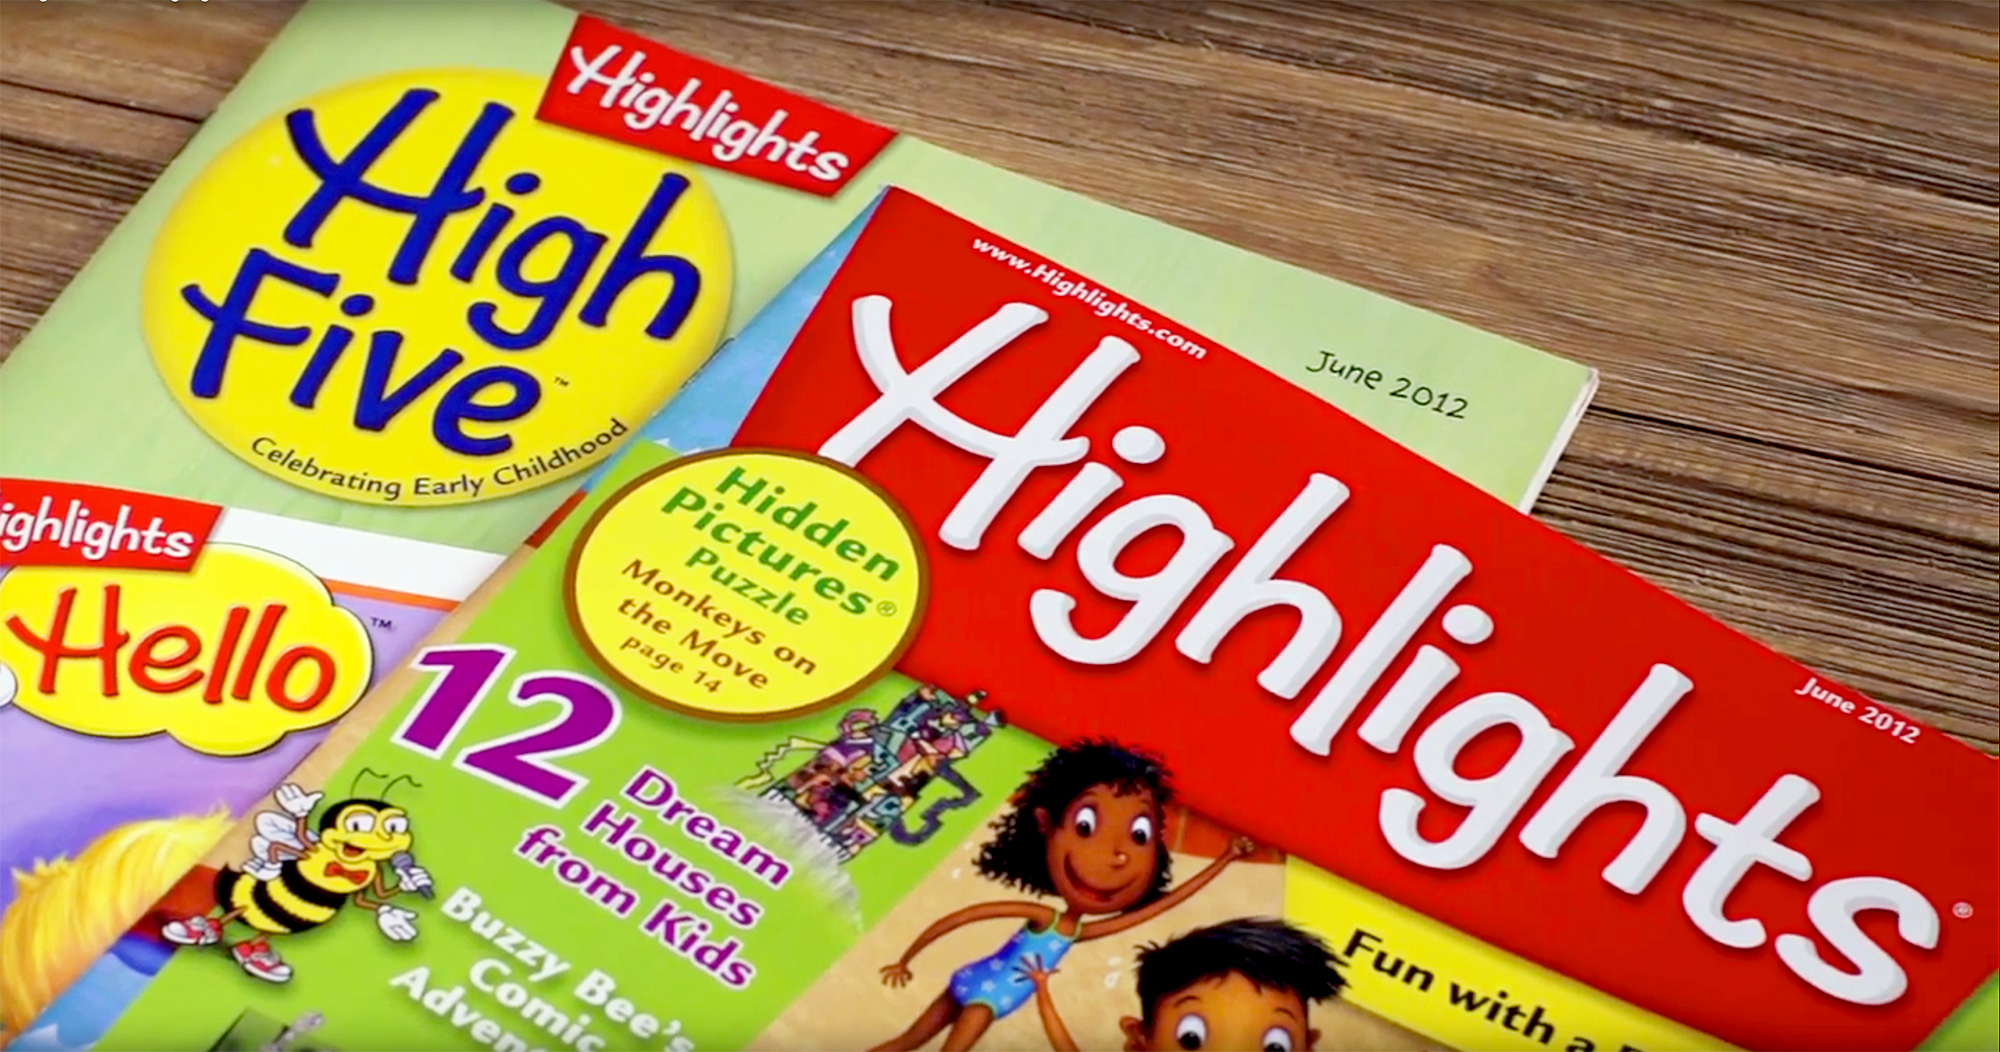 Highlights Magazine Is Under Fire